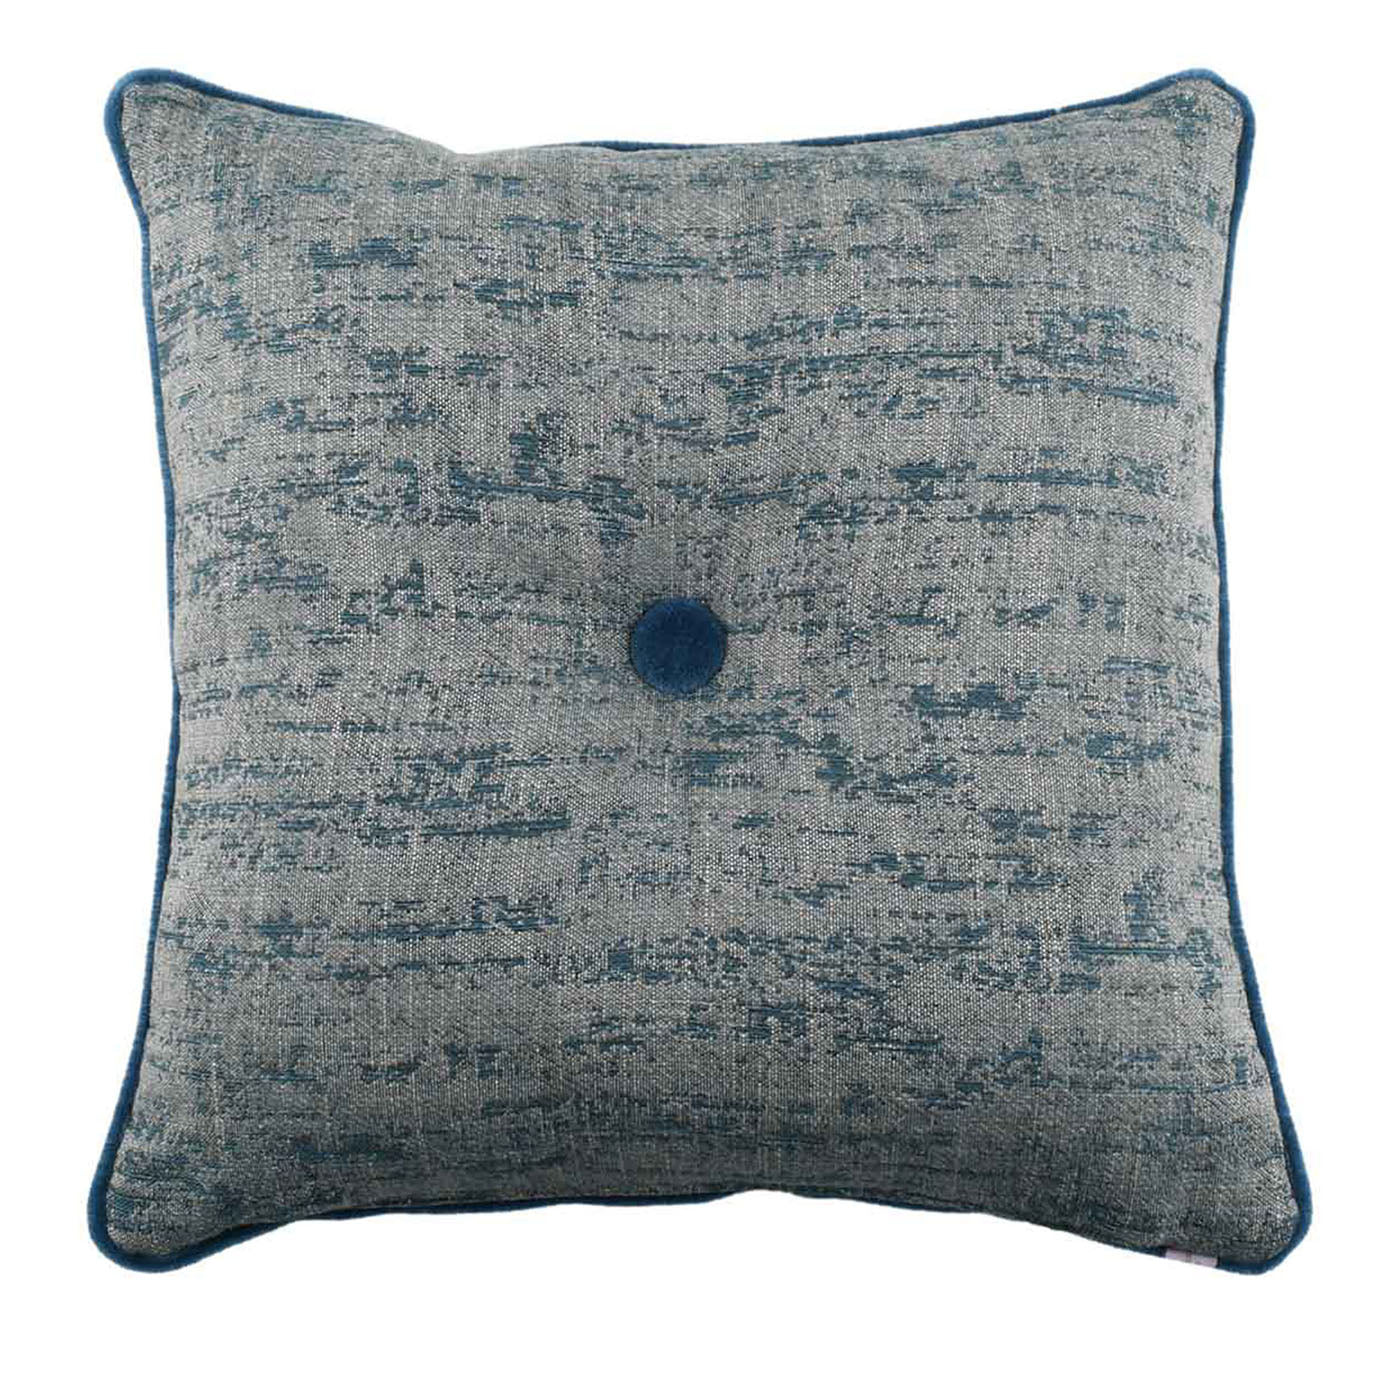 Square Carrè Cushion in gray blue jacquard fabric - Main view